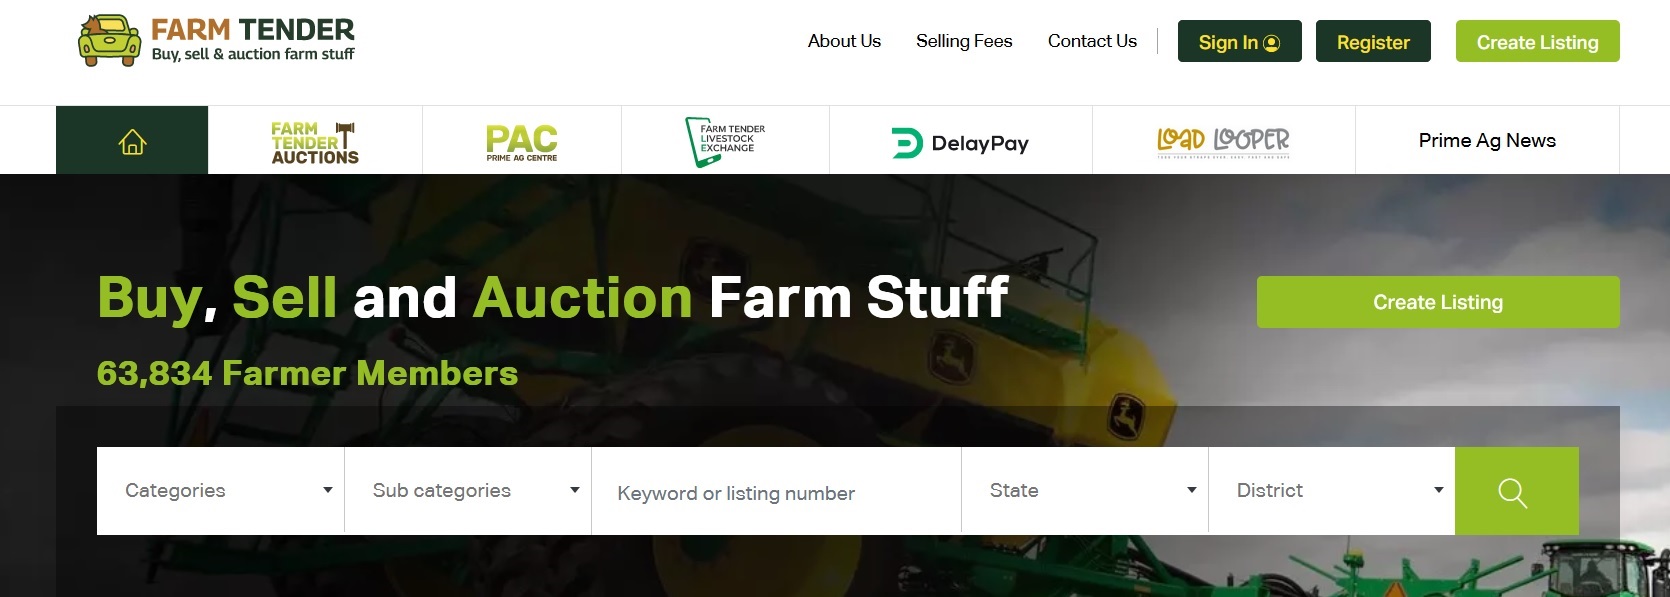 Farm Tender - Online Marketplace